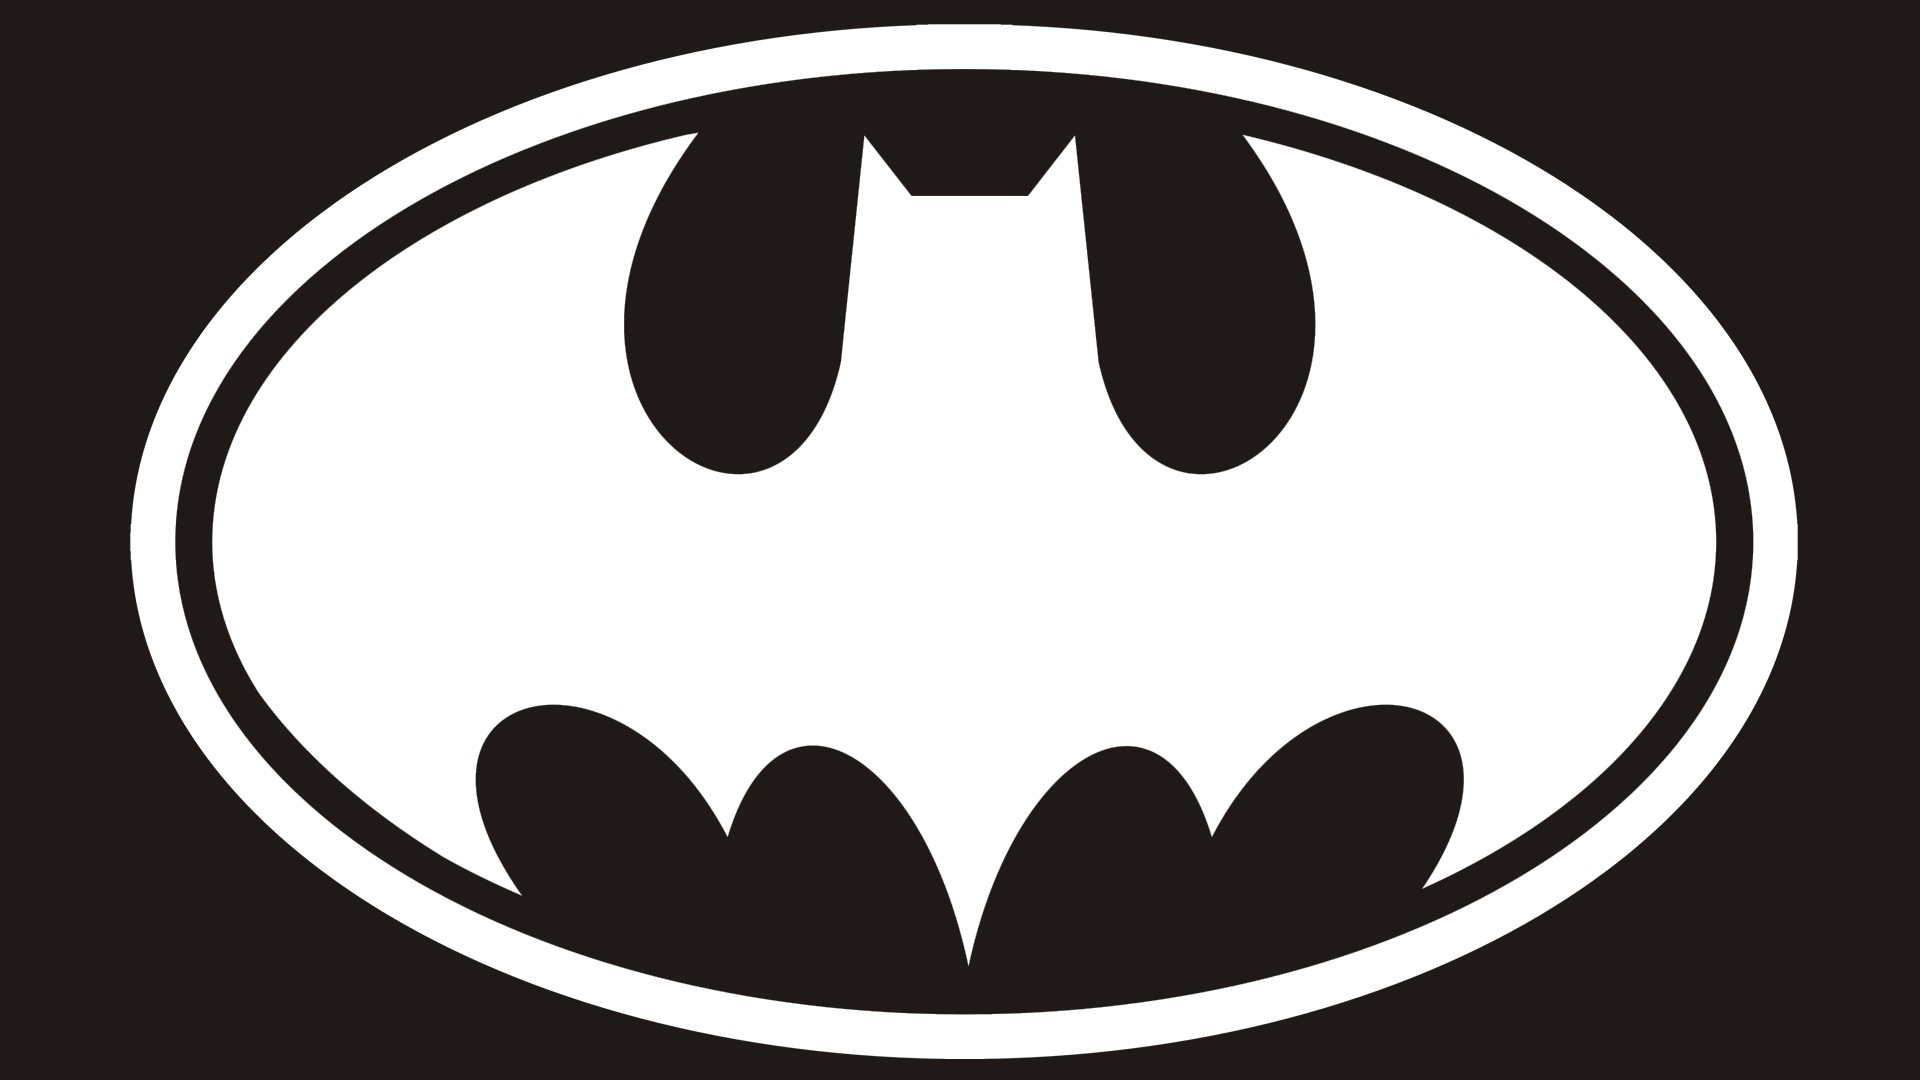 Bmp picture. Логотип bmp. Бэтмен эмблема. Черно белые эмблемы. Логотип Бэтмена черно белый.